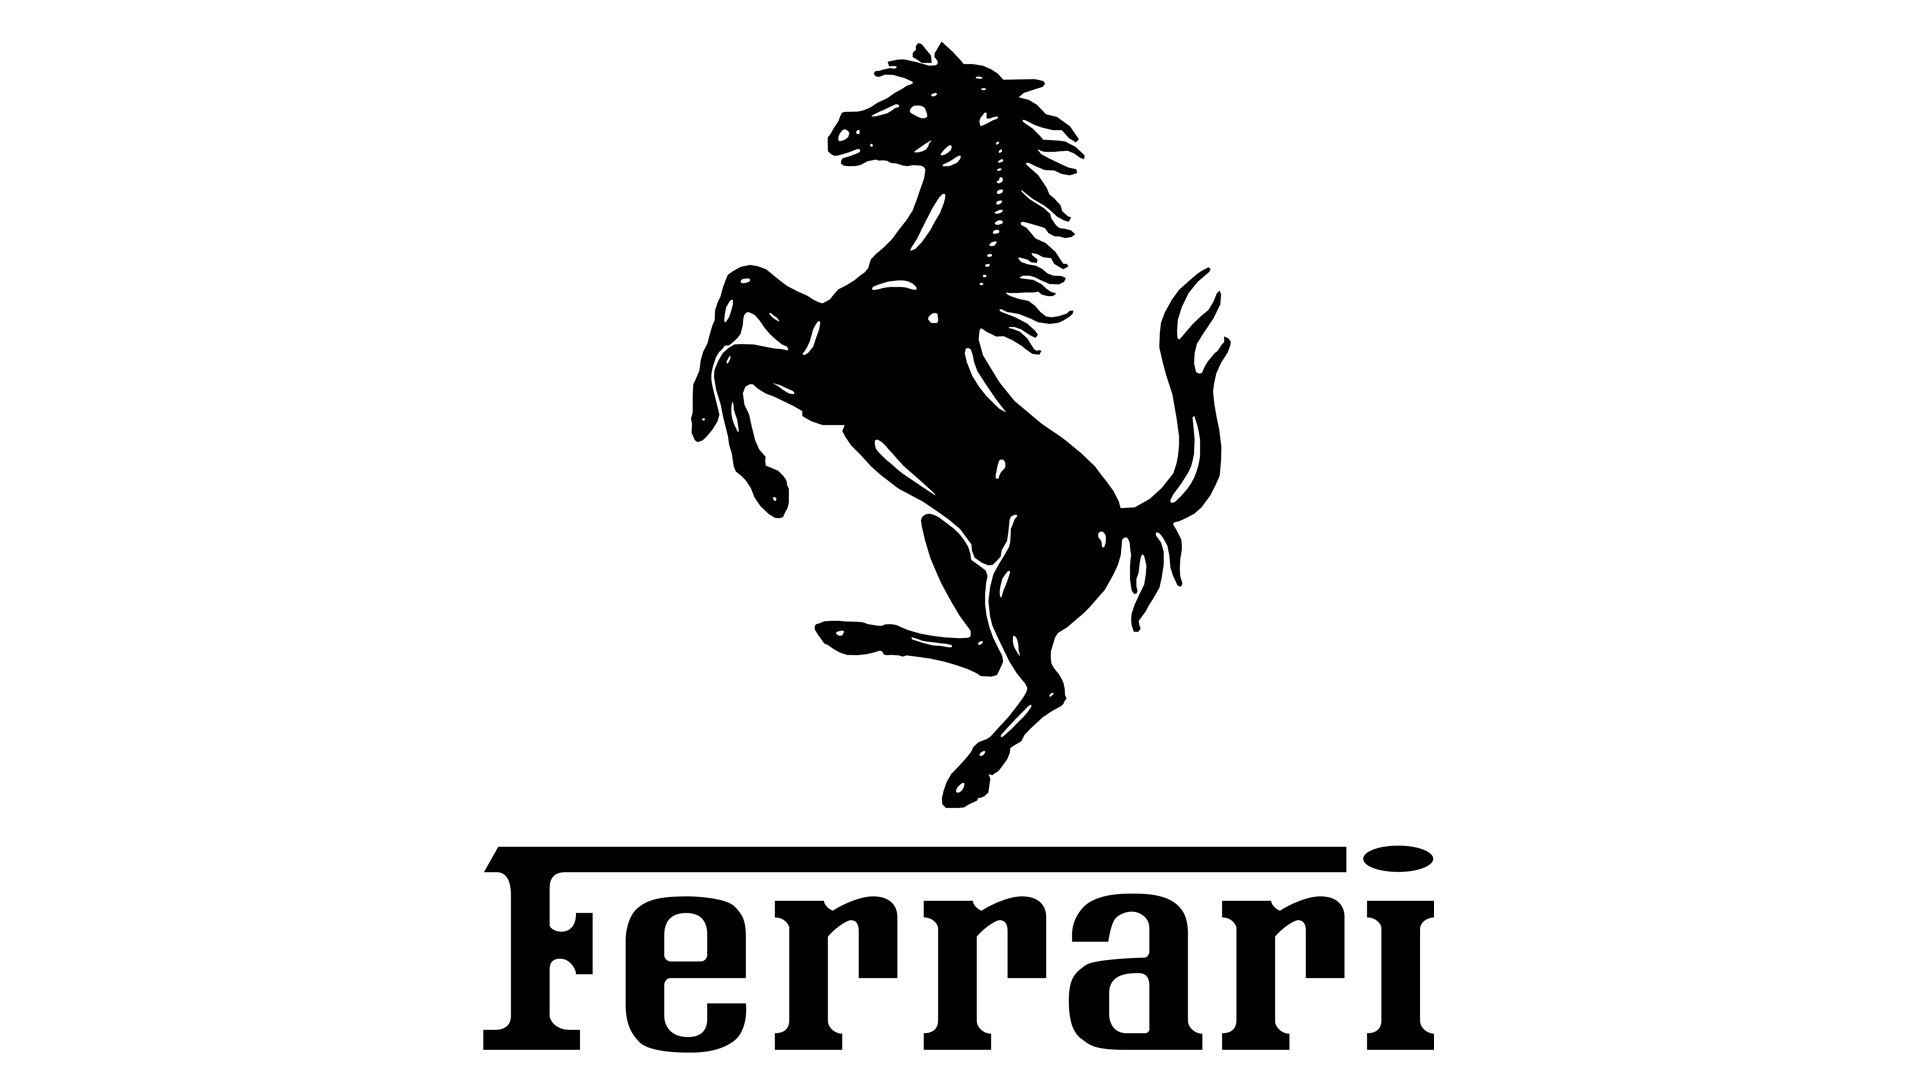 Ferrari Finance Rates